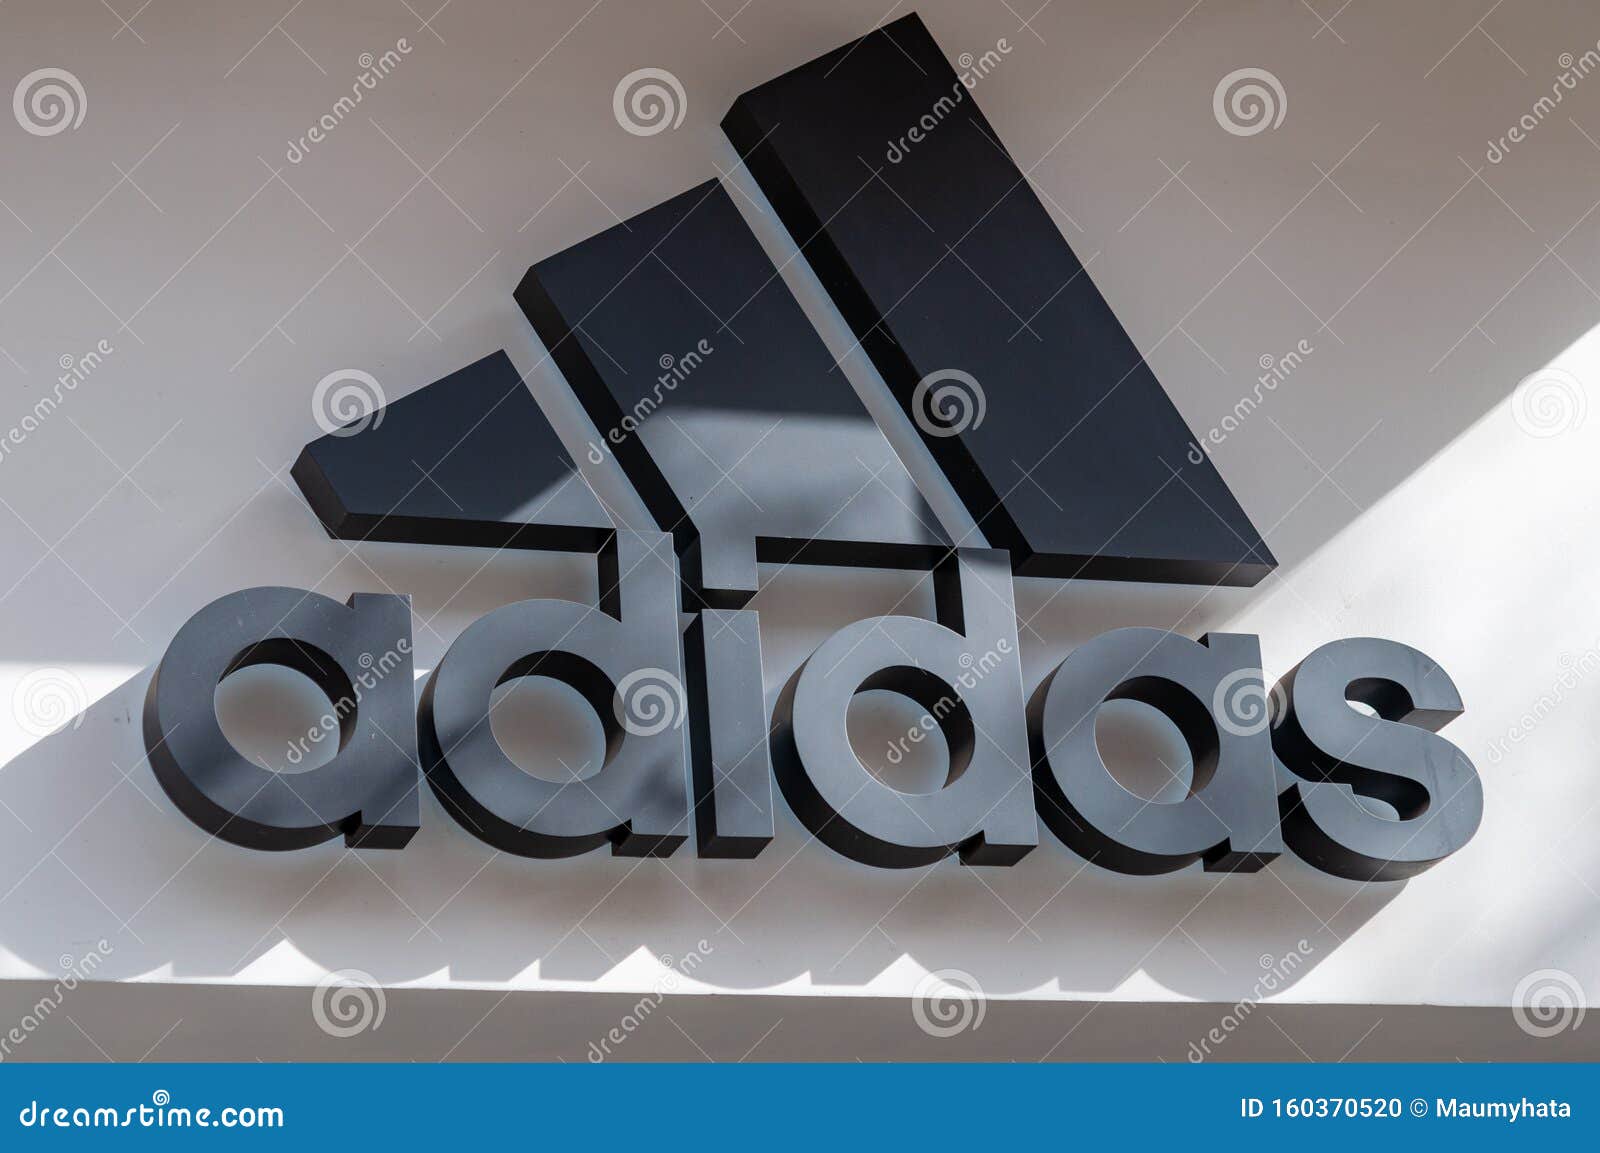 adidas multinational corporation